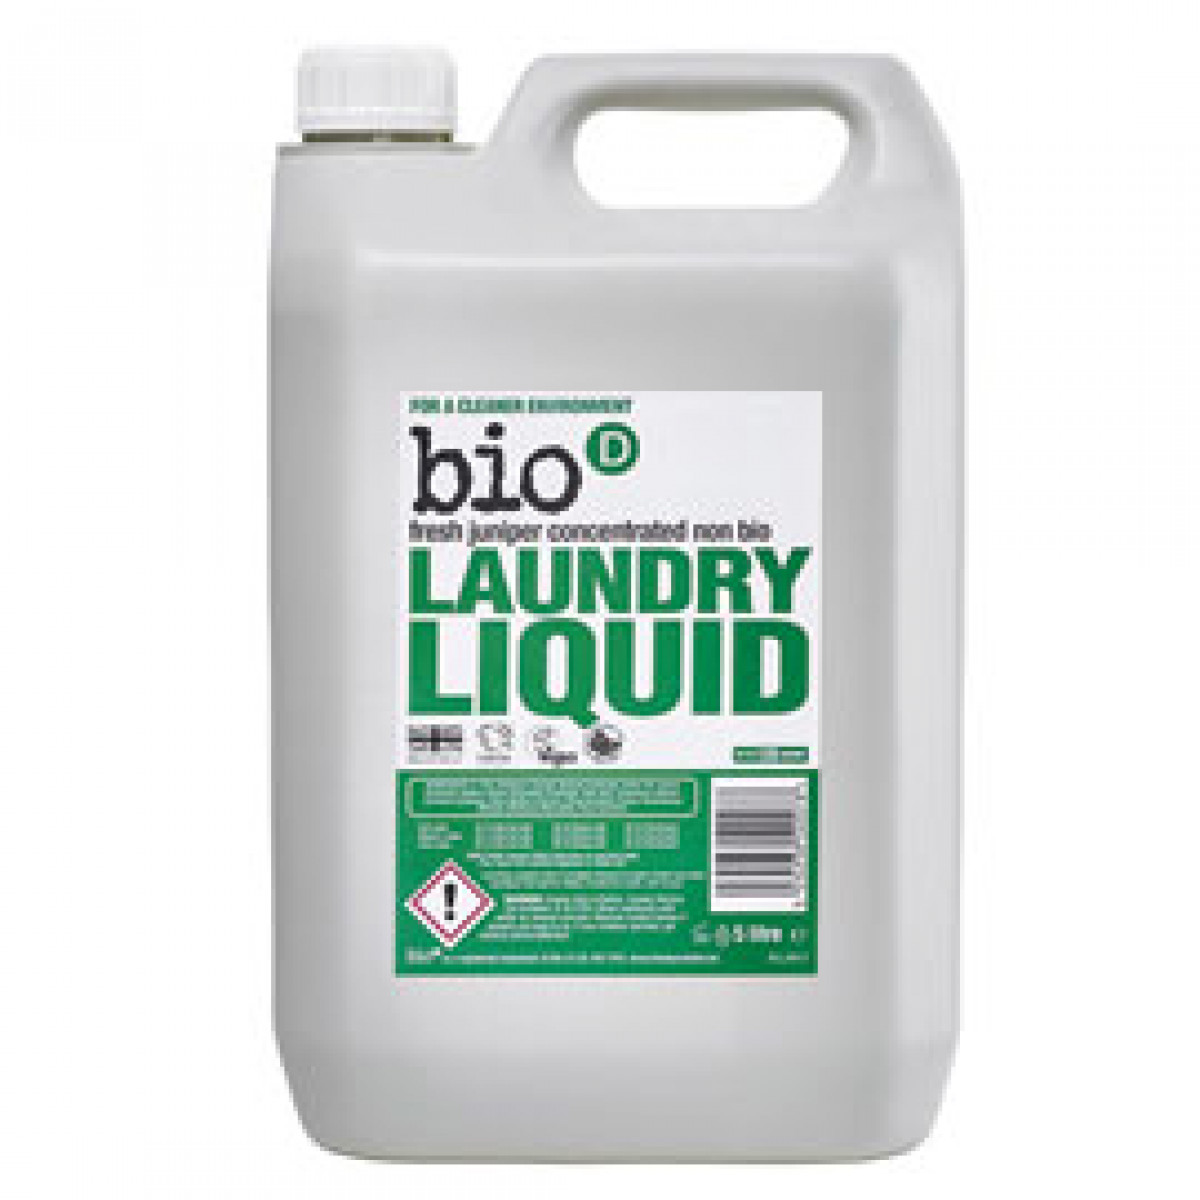 Product picture for Juniper Concentrated non bio Laundry Liquid